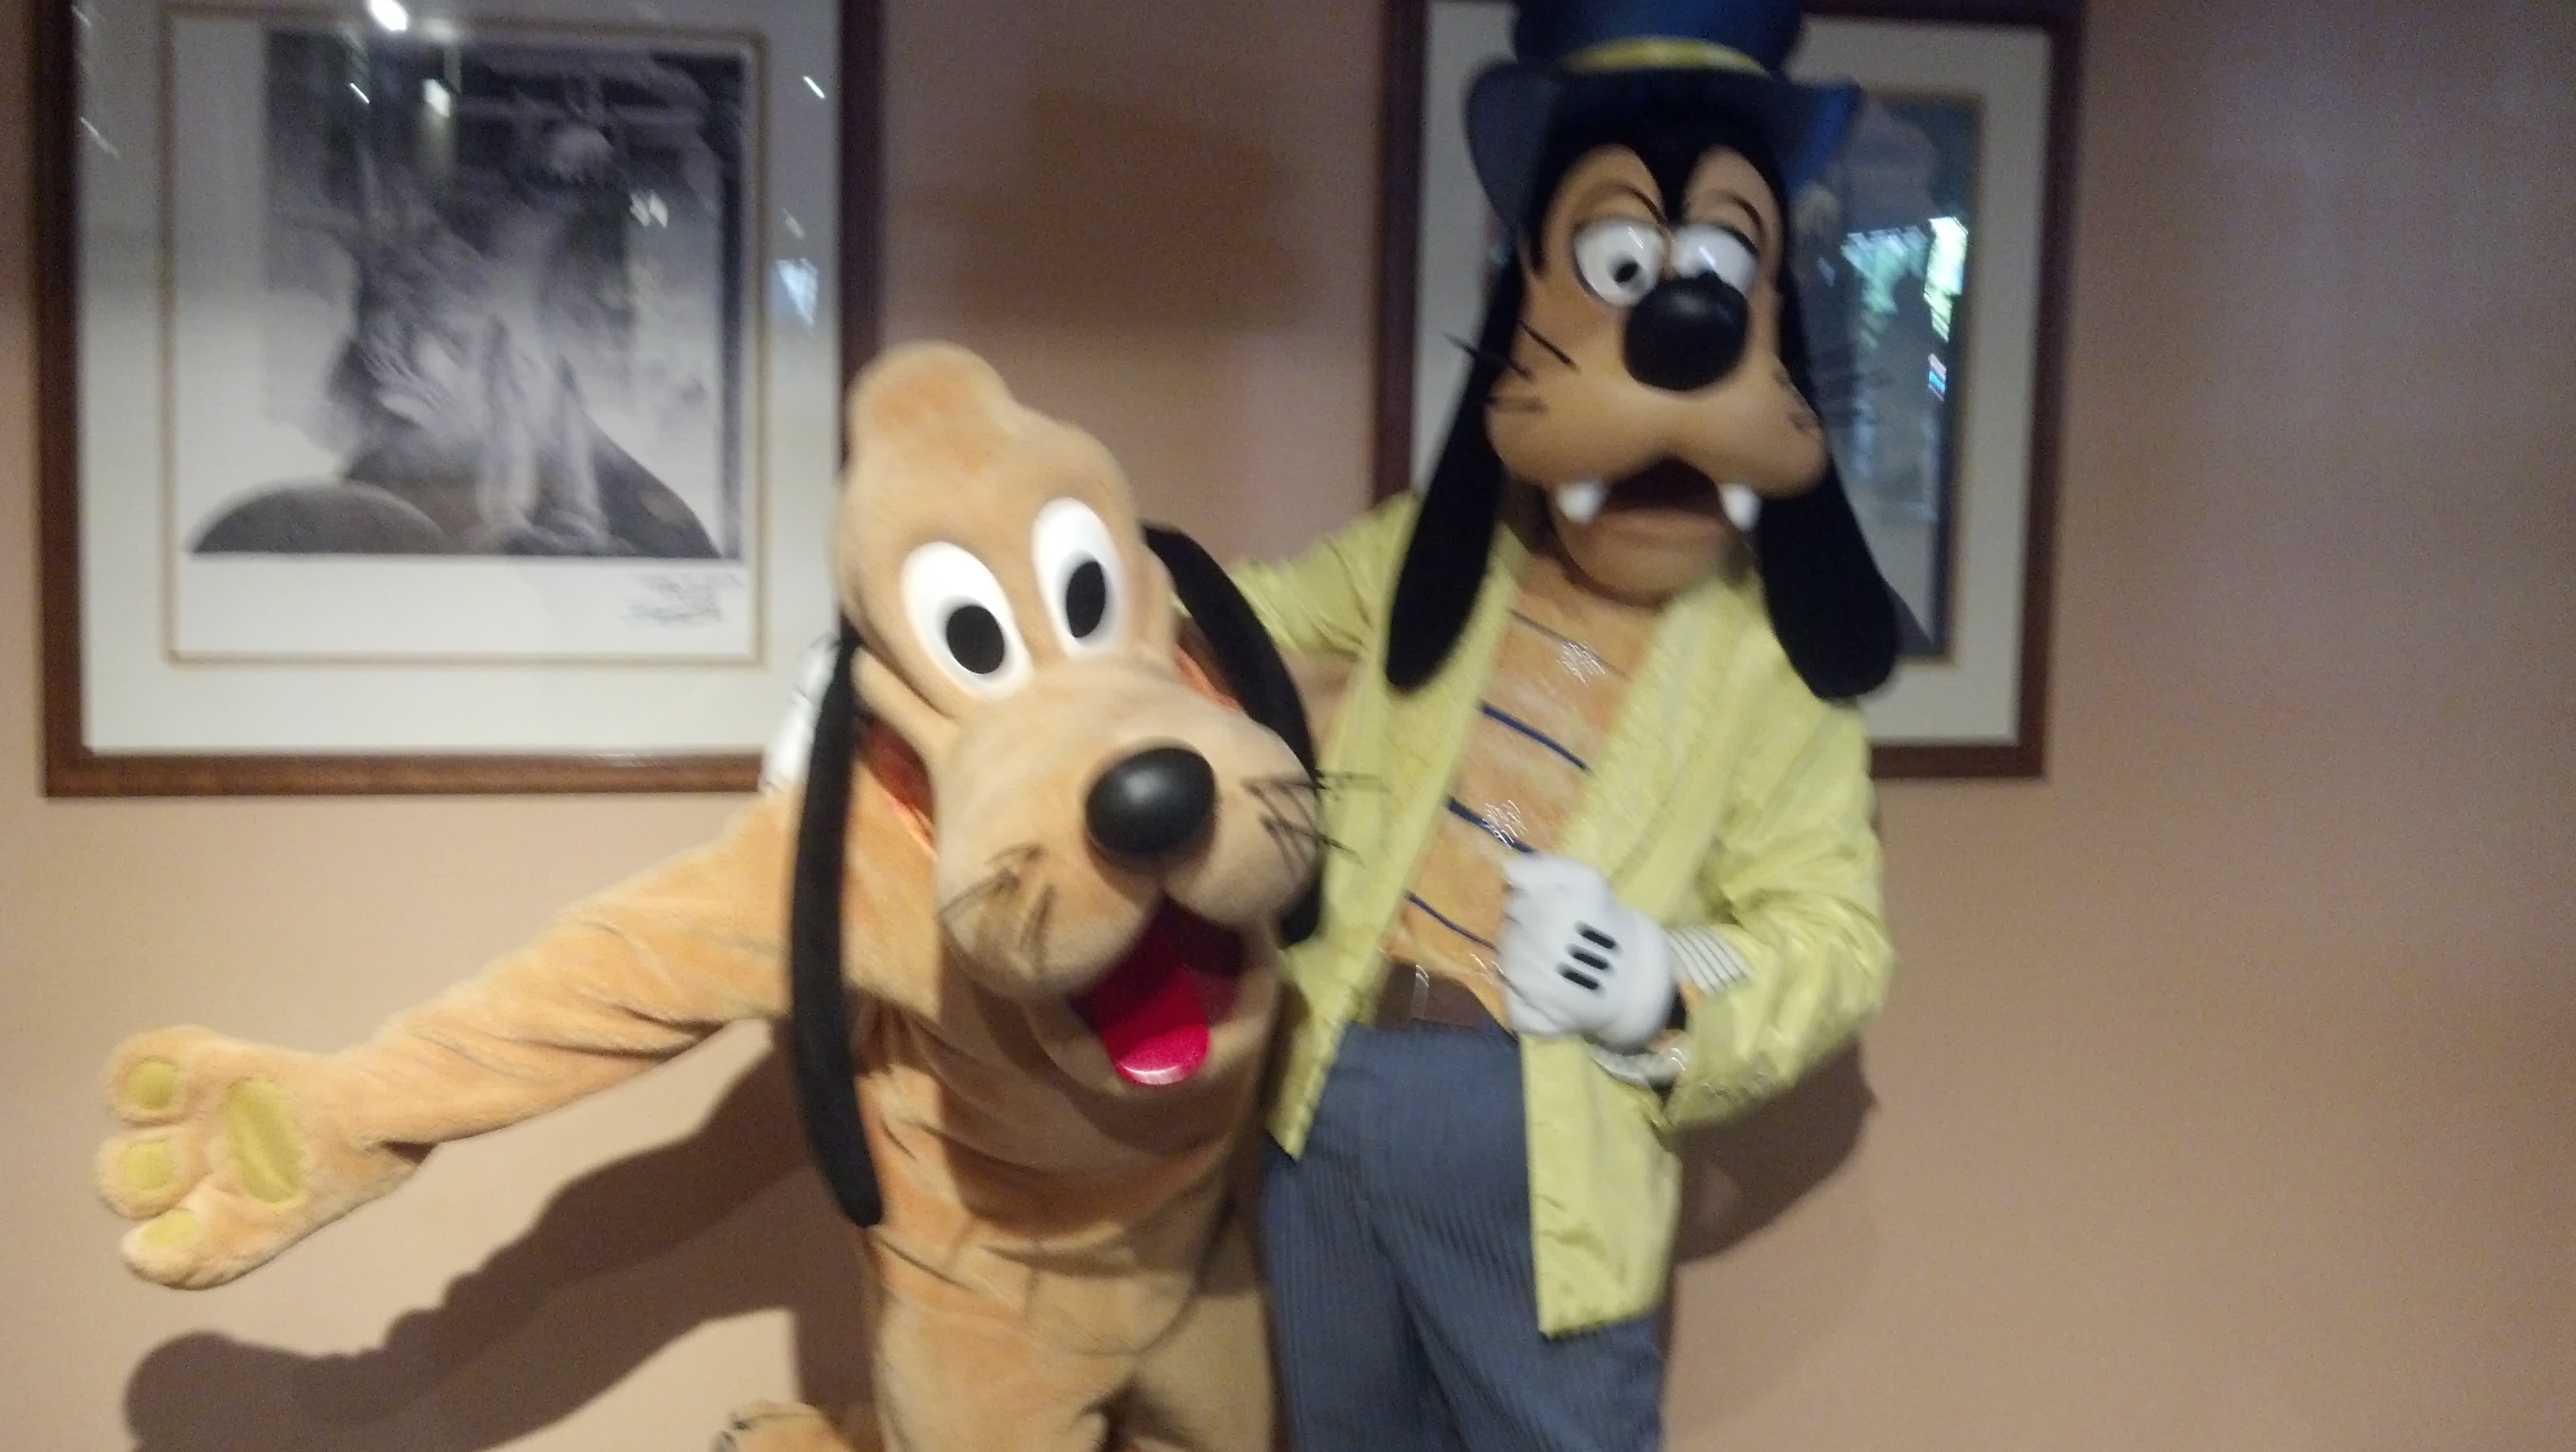 Pluto and Goofy at Hollywood Studios 2012